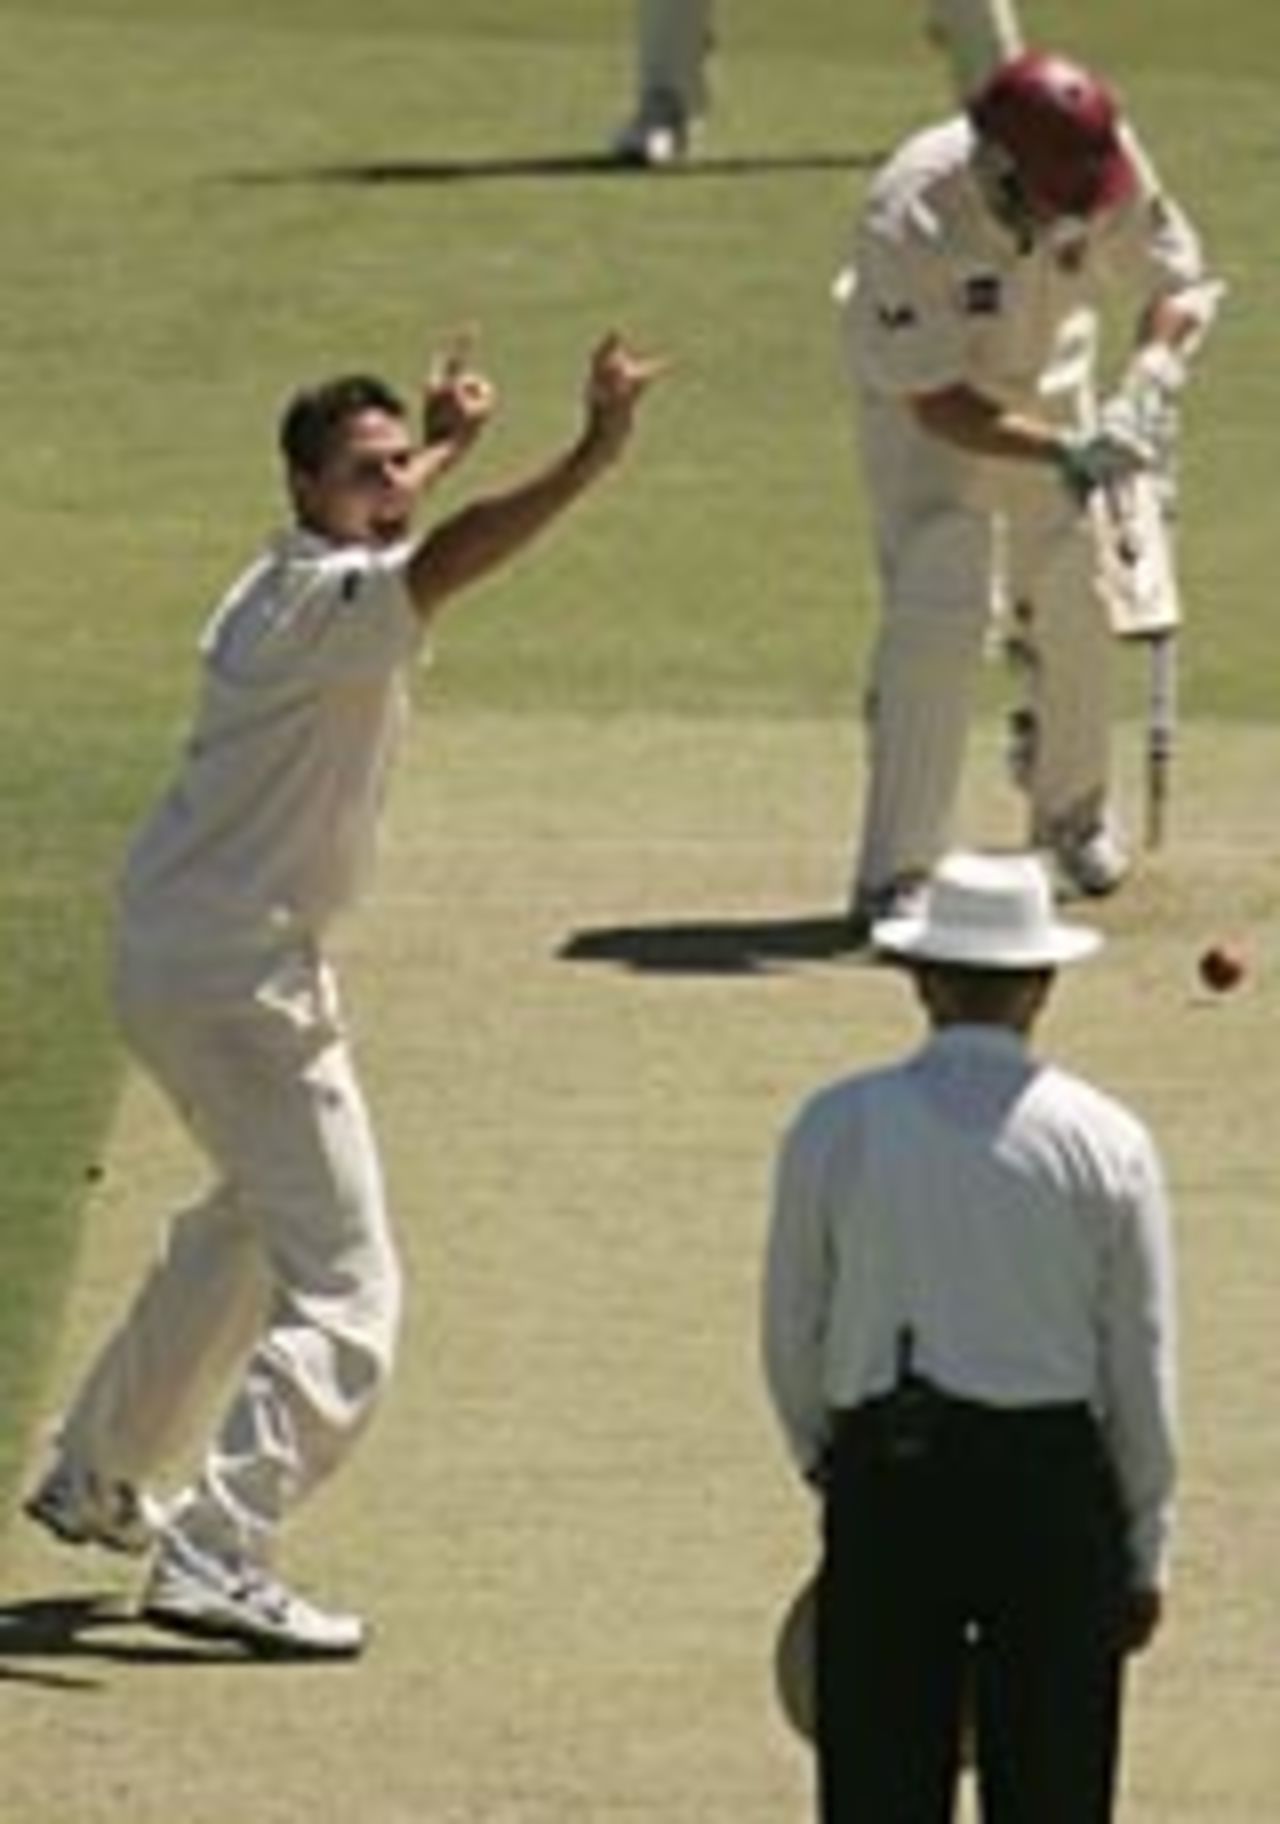 Shaun Tait traps Clinton Perren leg-before, South Australia v Queensland, Adelaide Oval, November 9, 2004